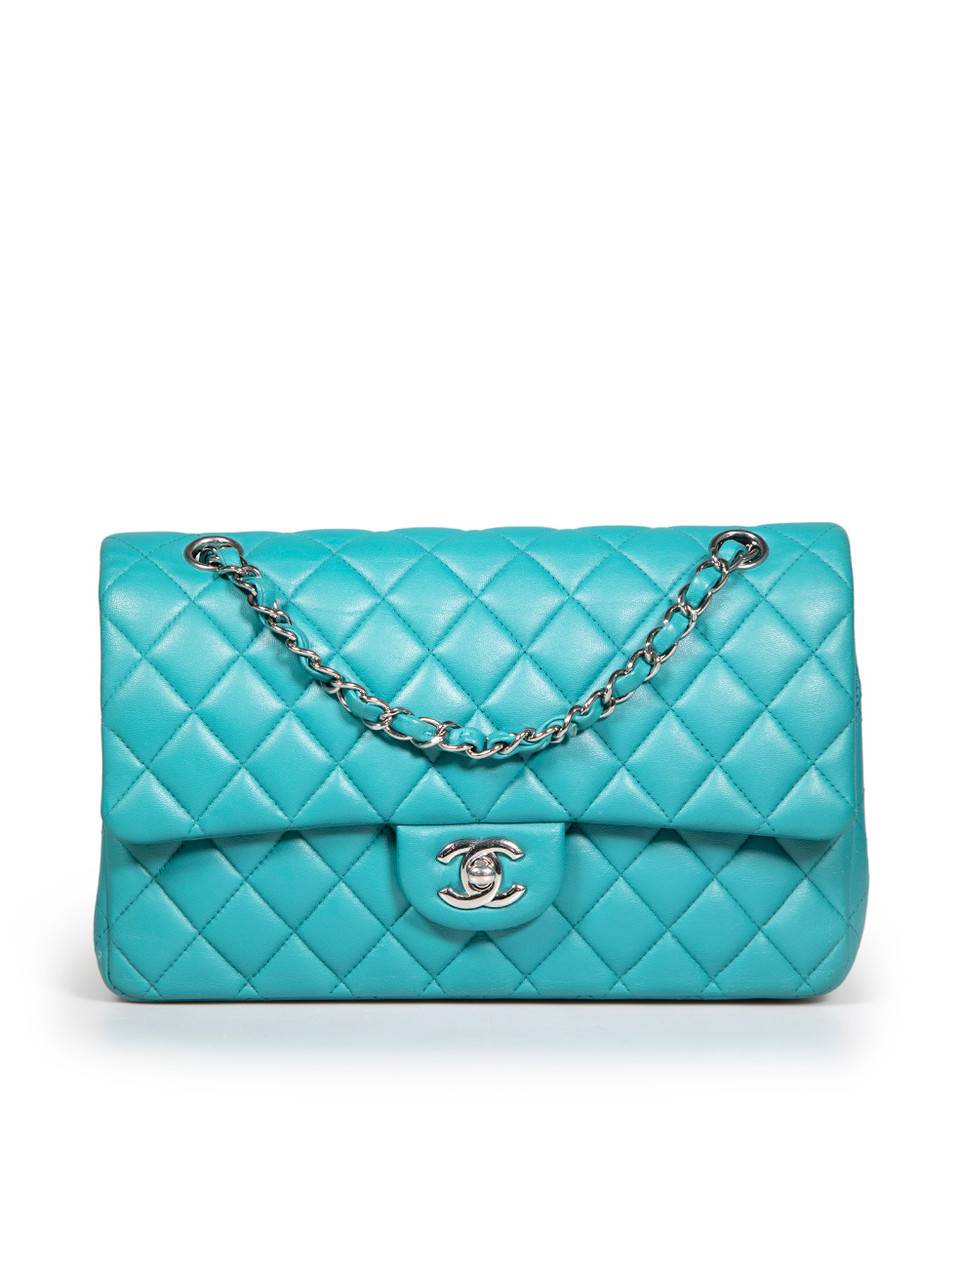 Chanel 2014 Turquoise Lambskin Classic Double Flap Medium SHW Shoulder Bag